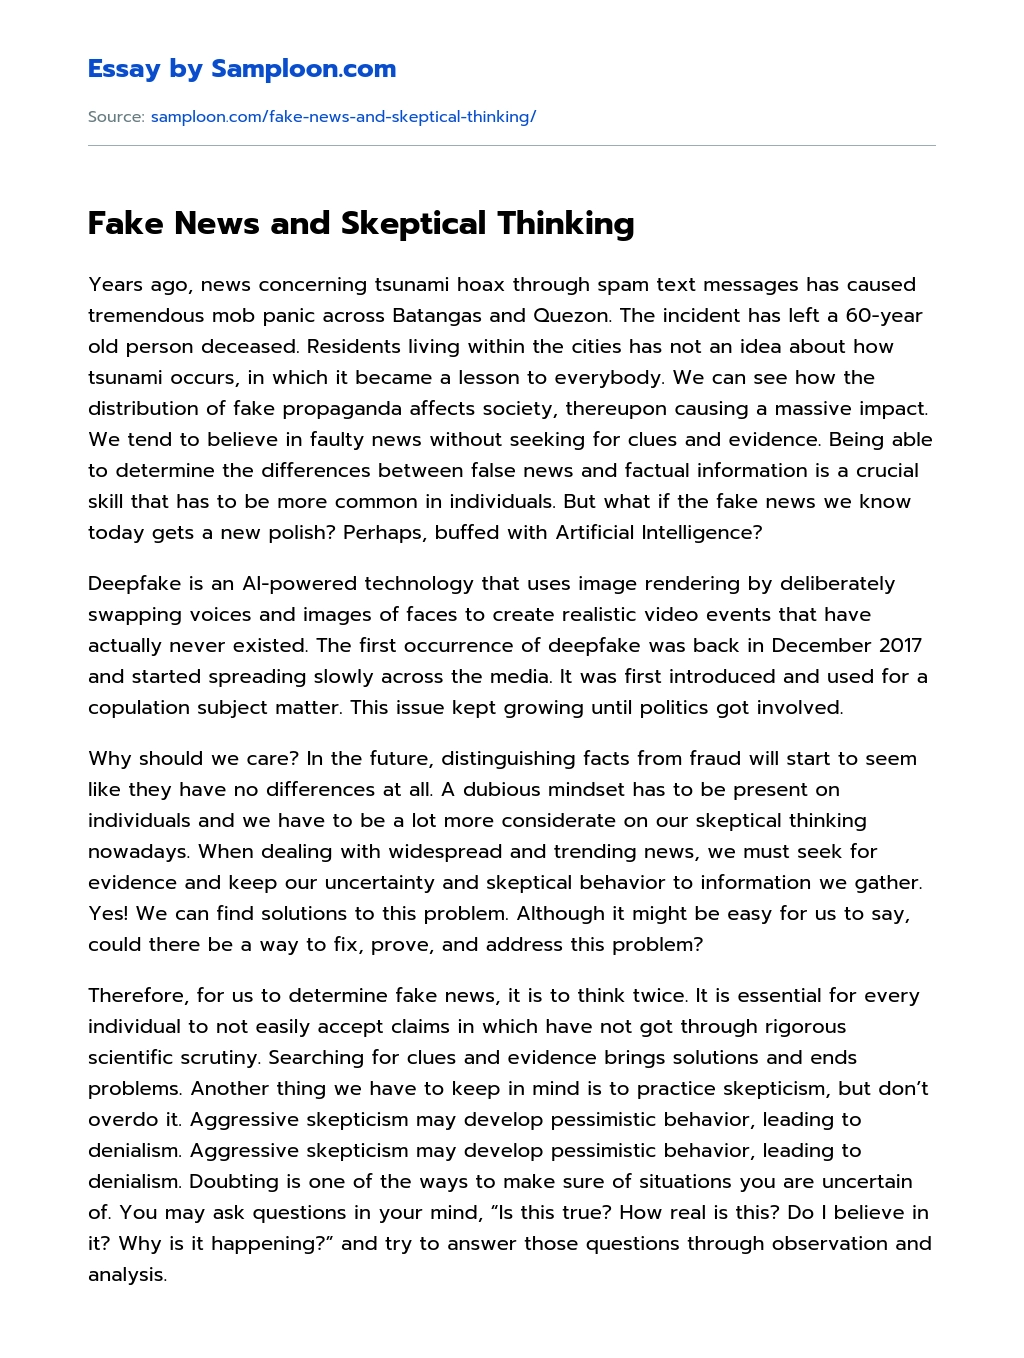 Fake News and Skeptical Thinking essay